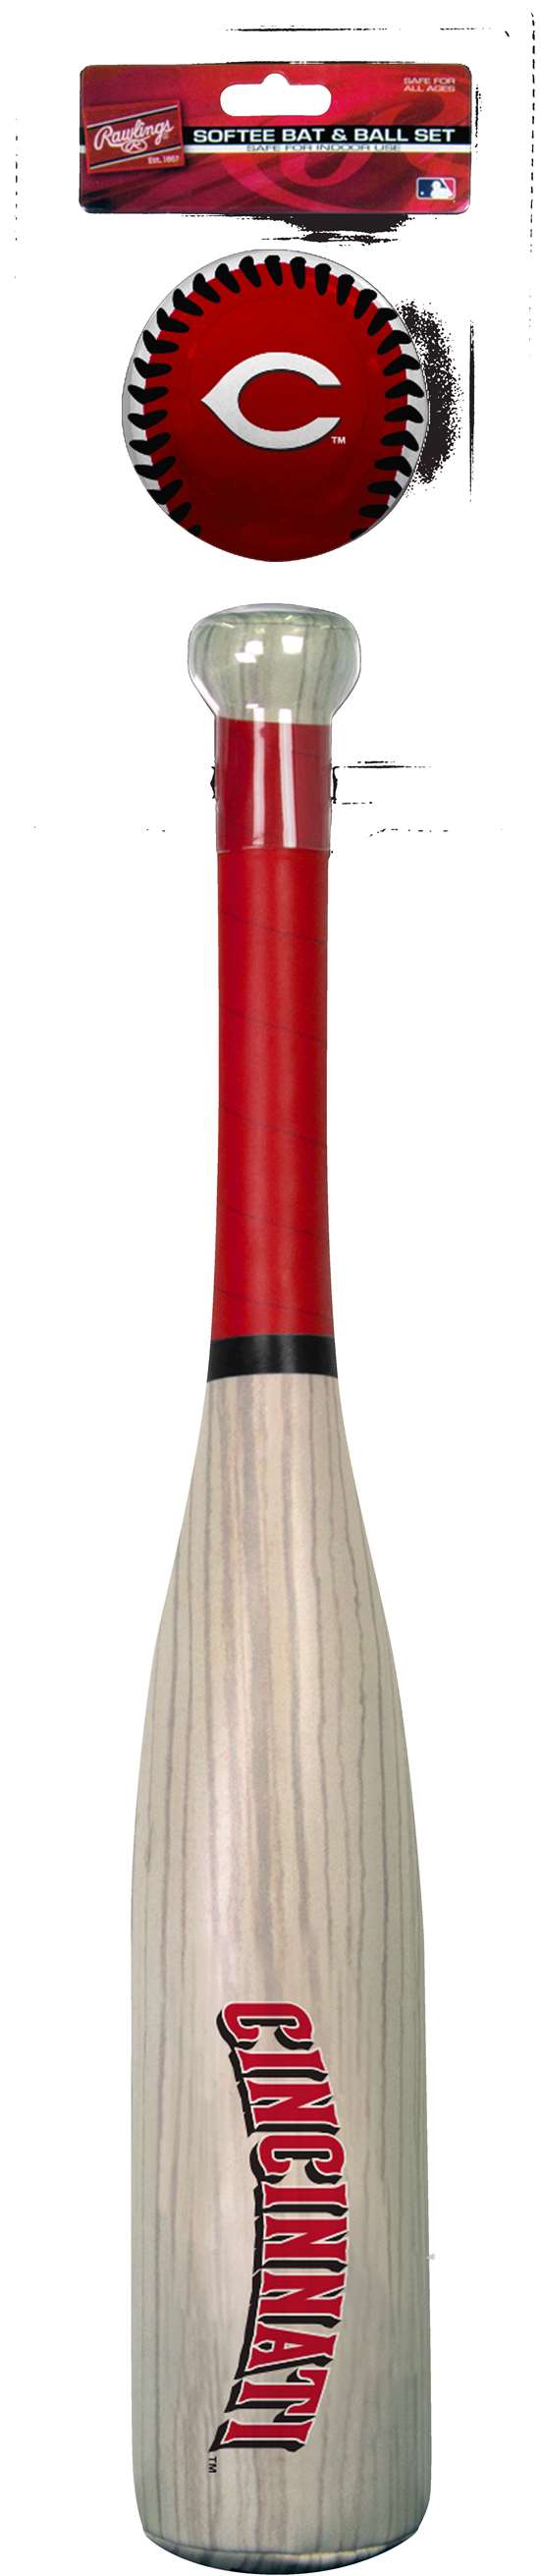 MLB Cincinnati Reds Grand Slam Softee Bat and Ball Set (Wood Grain)